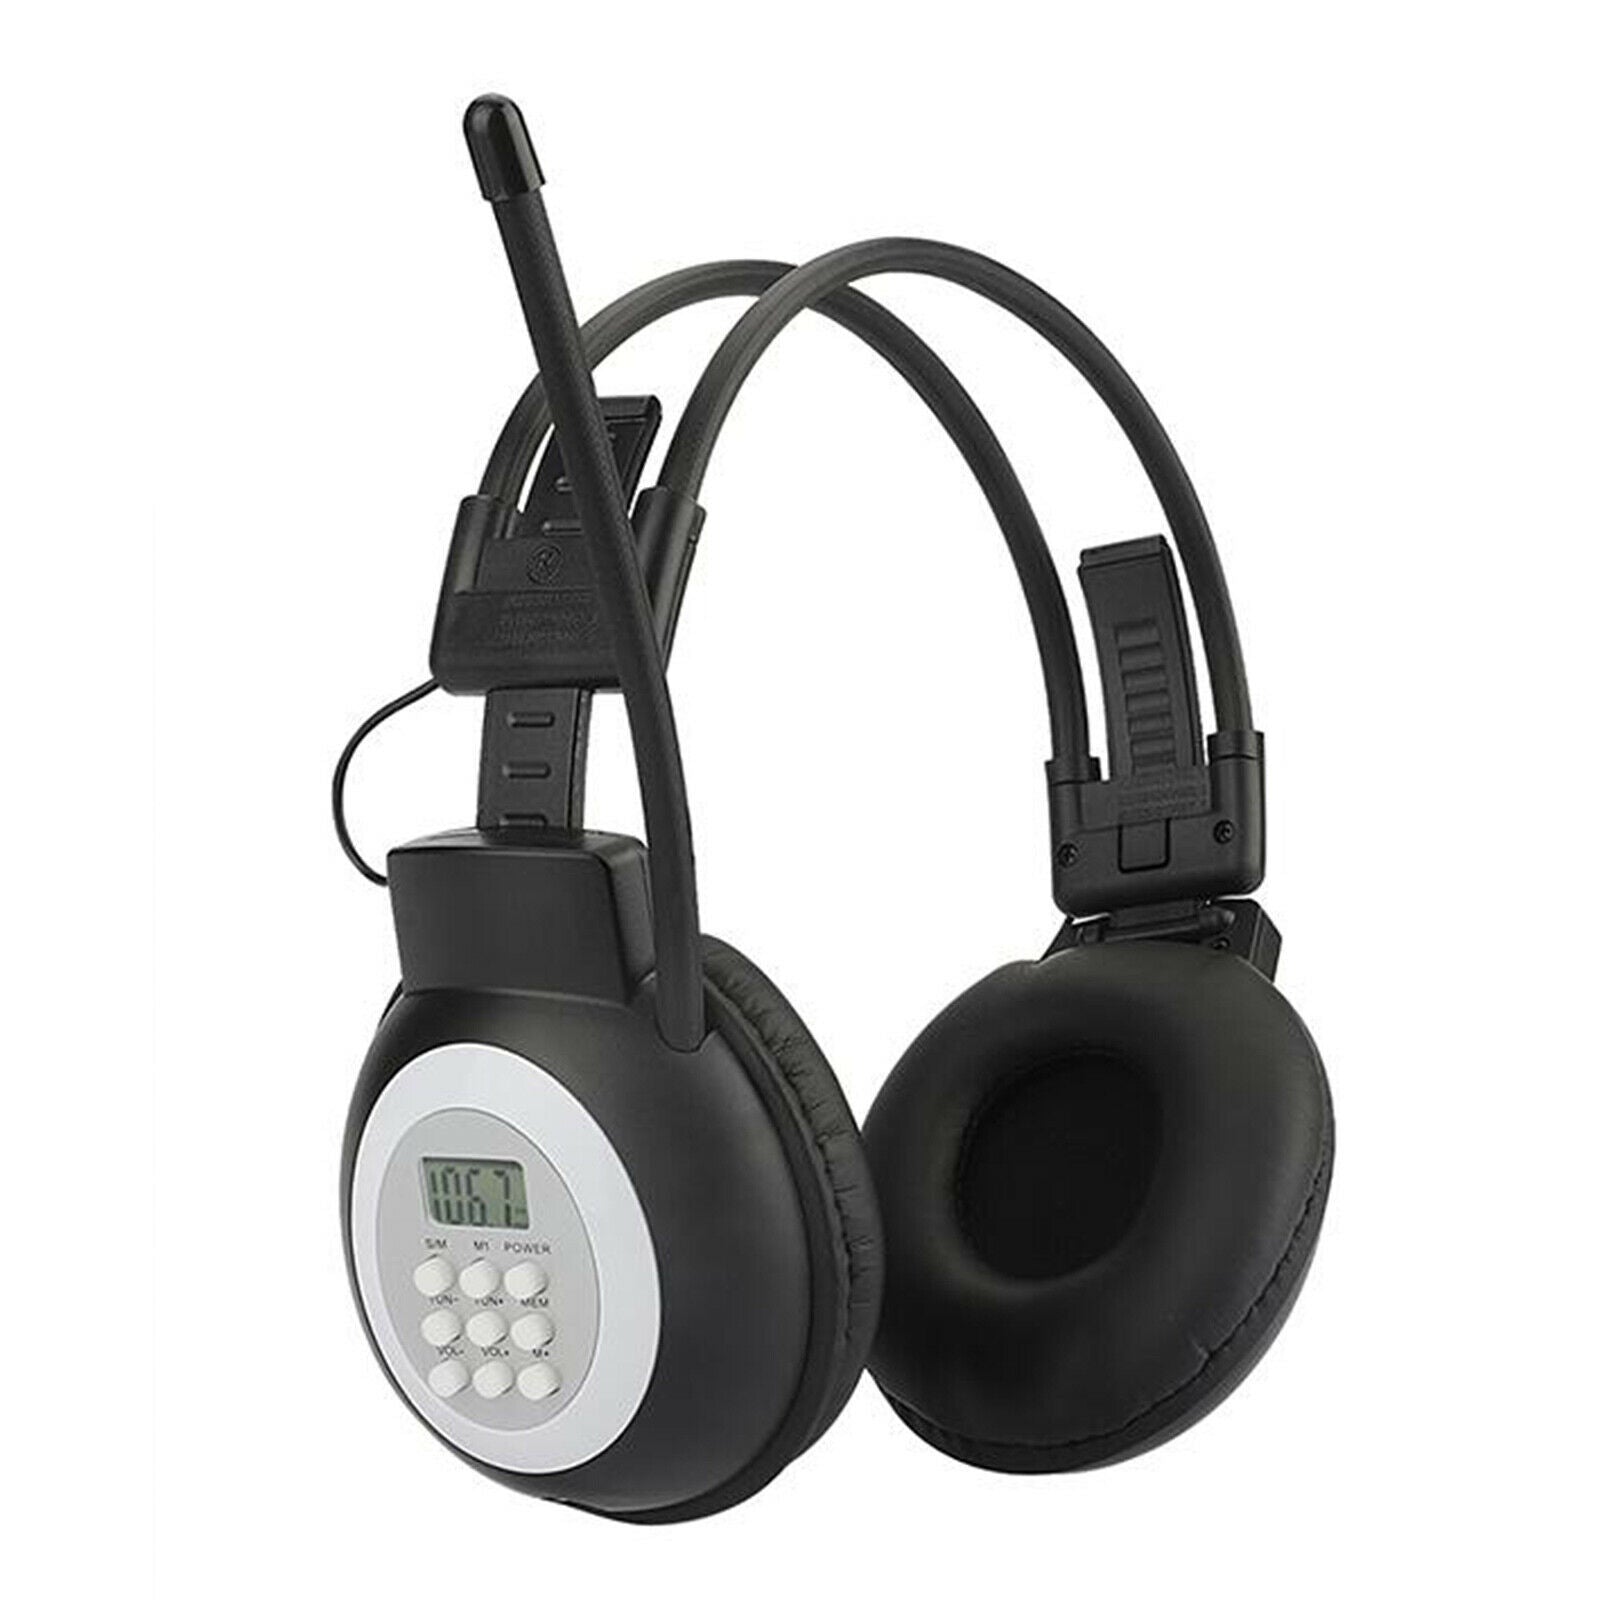 Portable Personal FM Radio Headphones , Wireless Headset with Radio Built